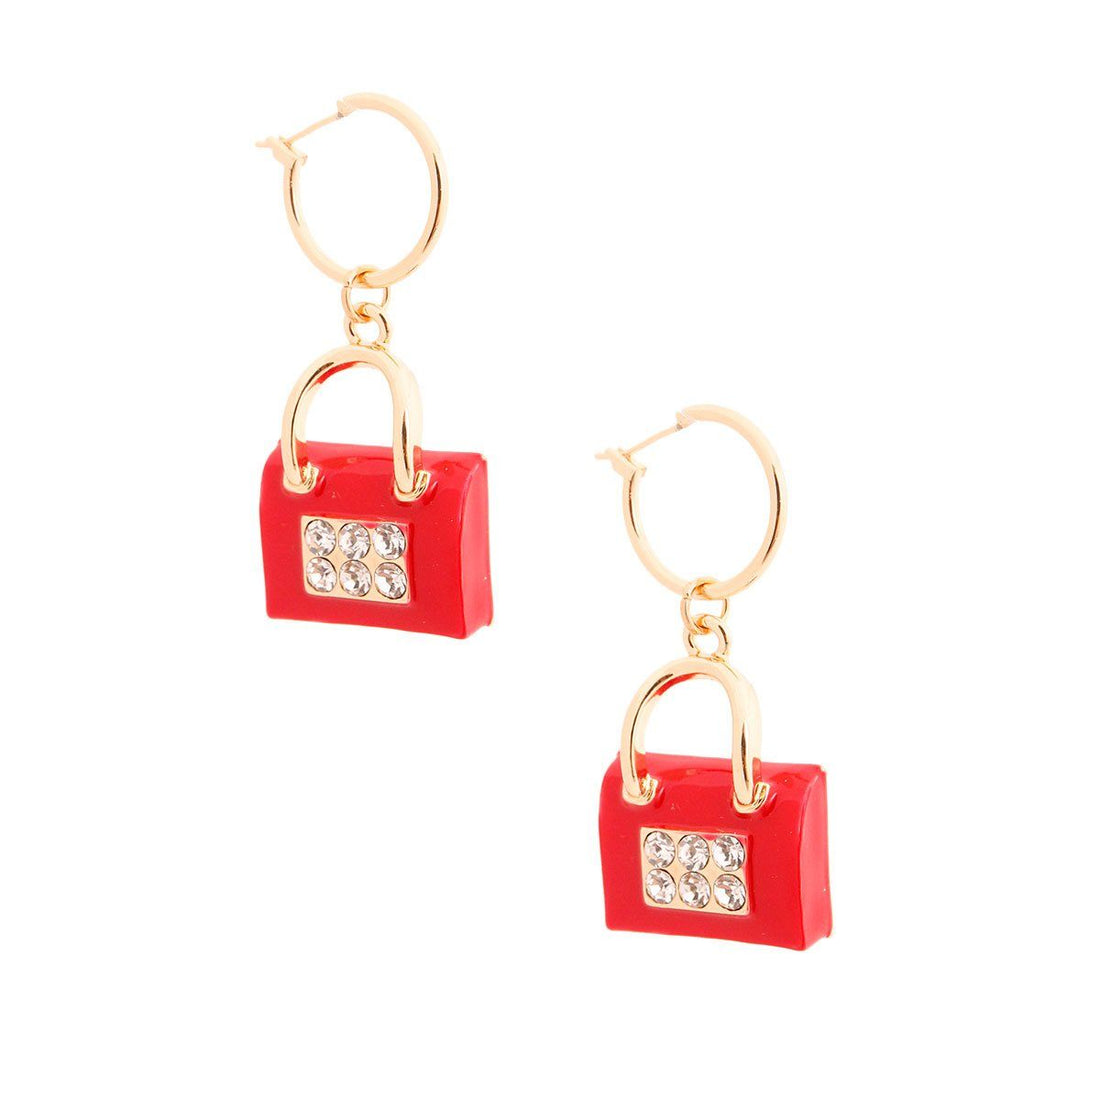 Red Boutique Handbag Hoops